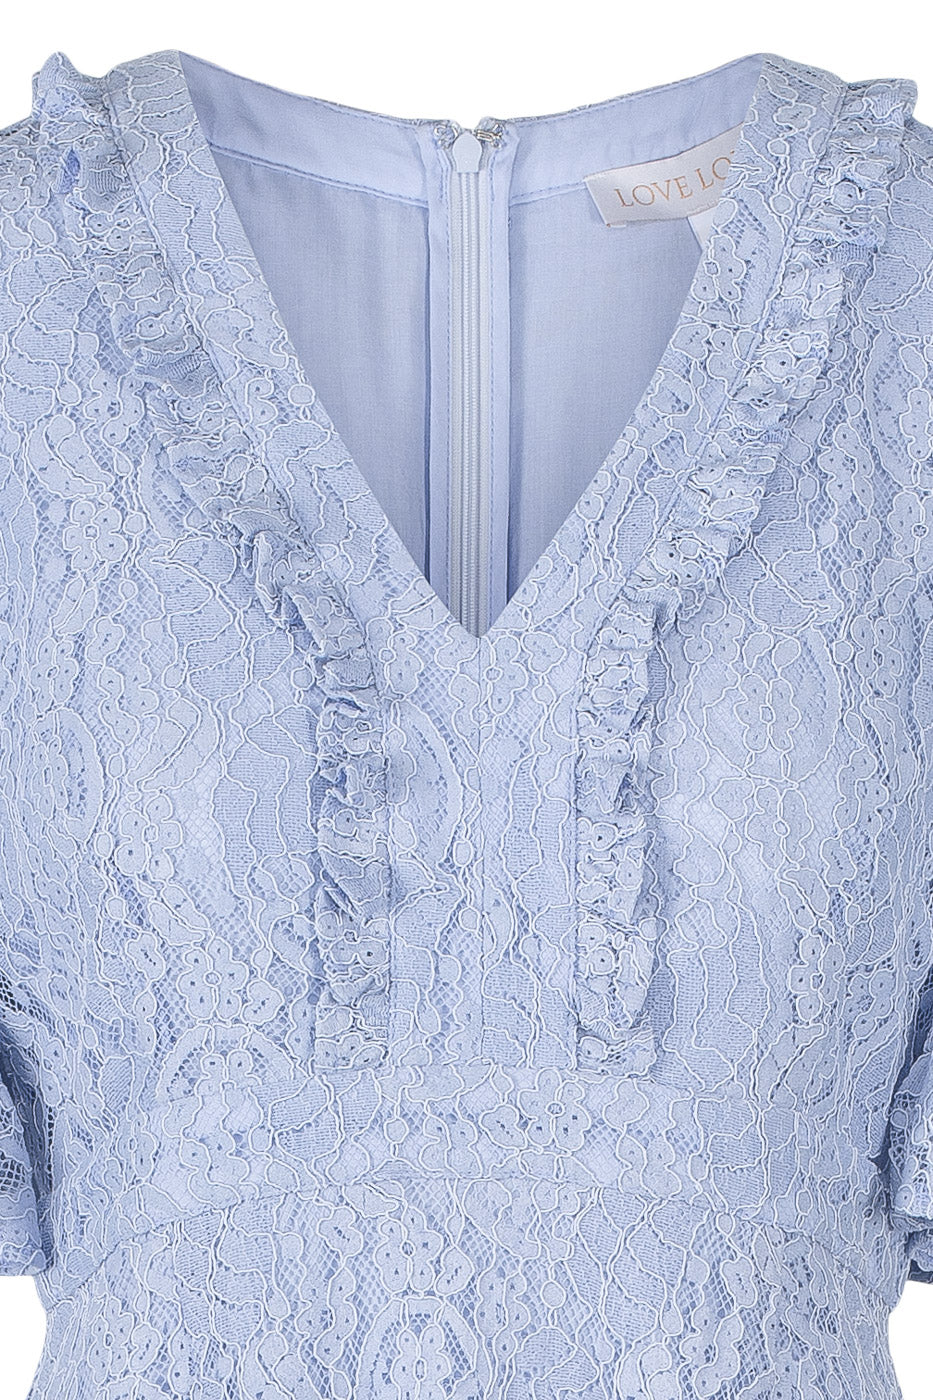 Catalina Maxi Dress - Light Blue Lace